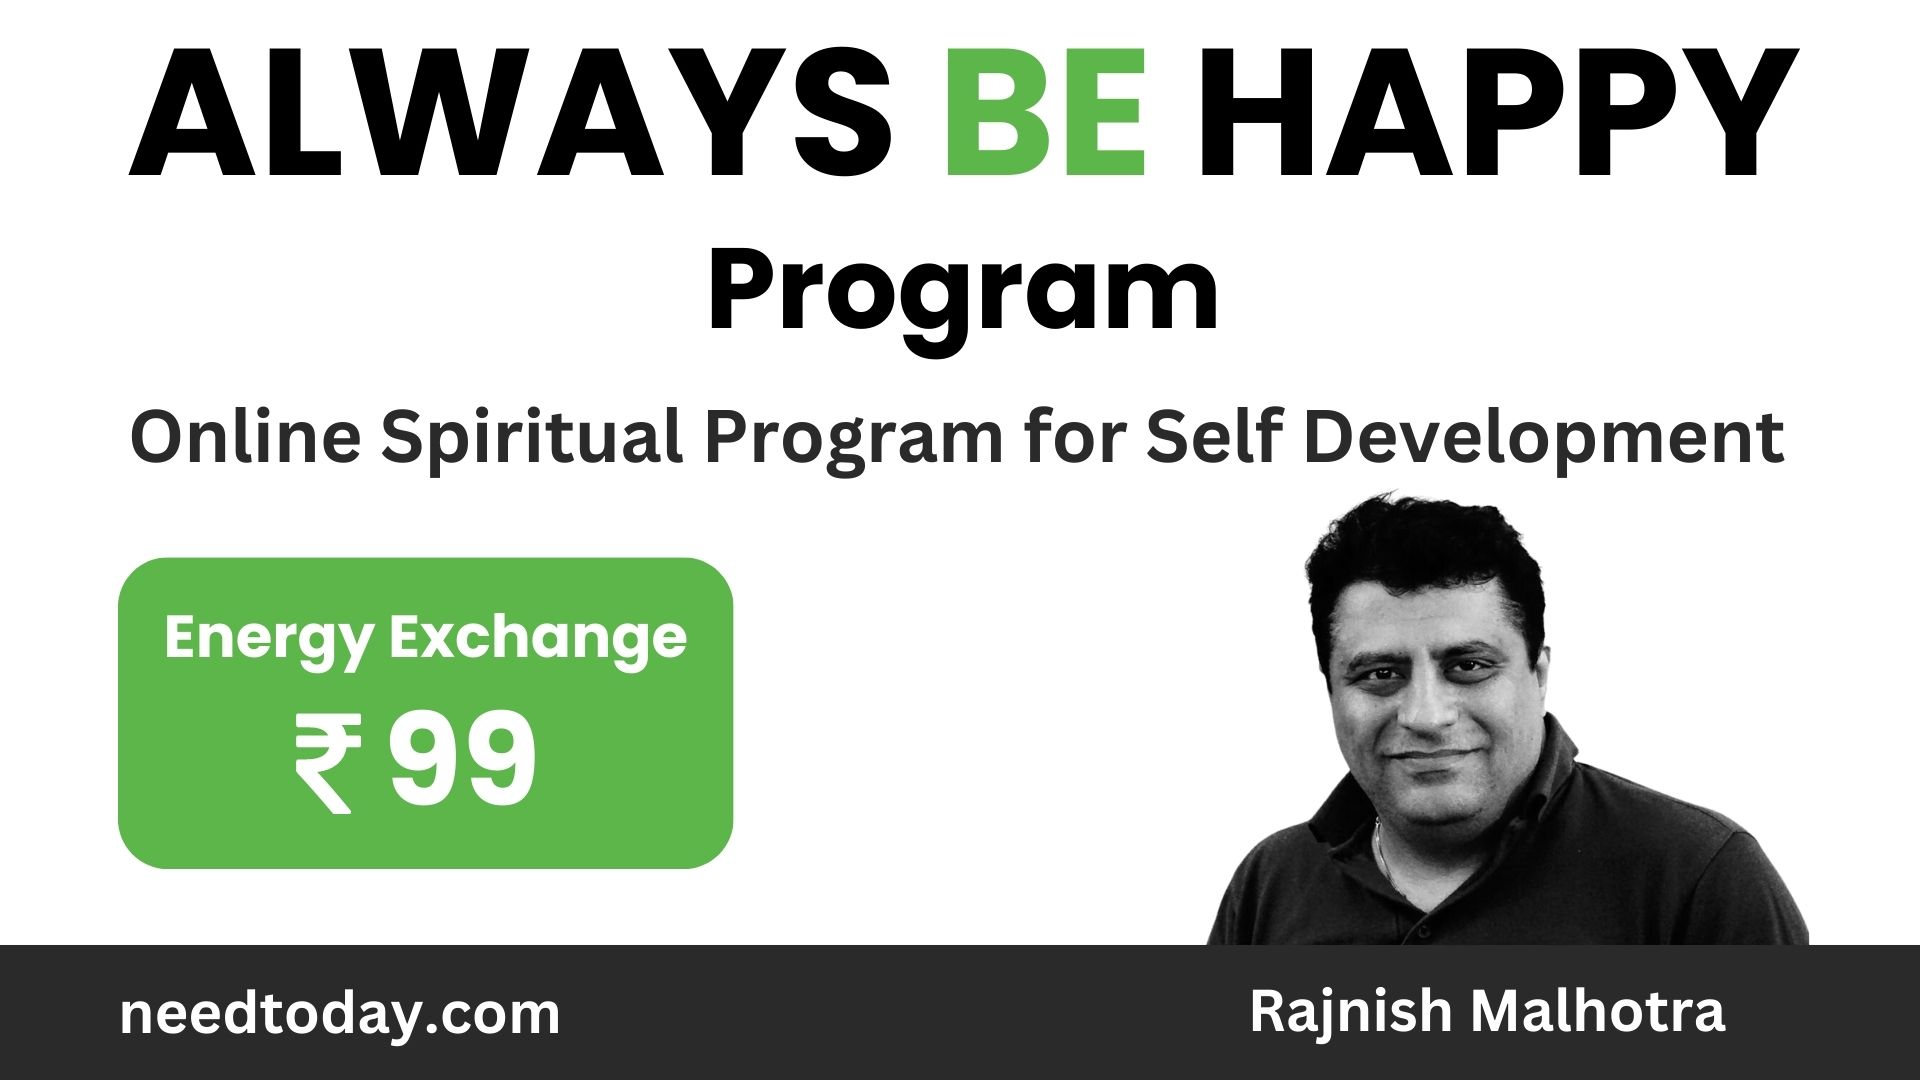 Always Be Happy Program - Online Spiritual Program for Self Development